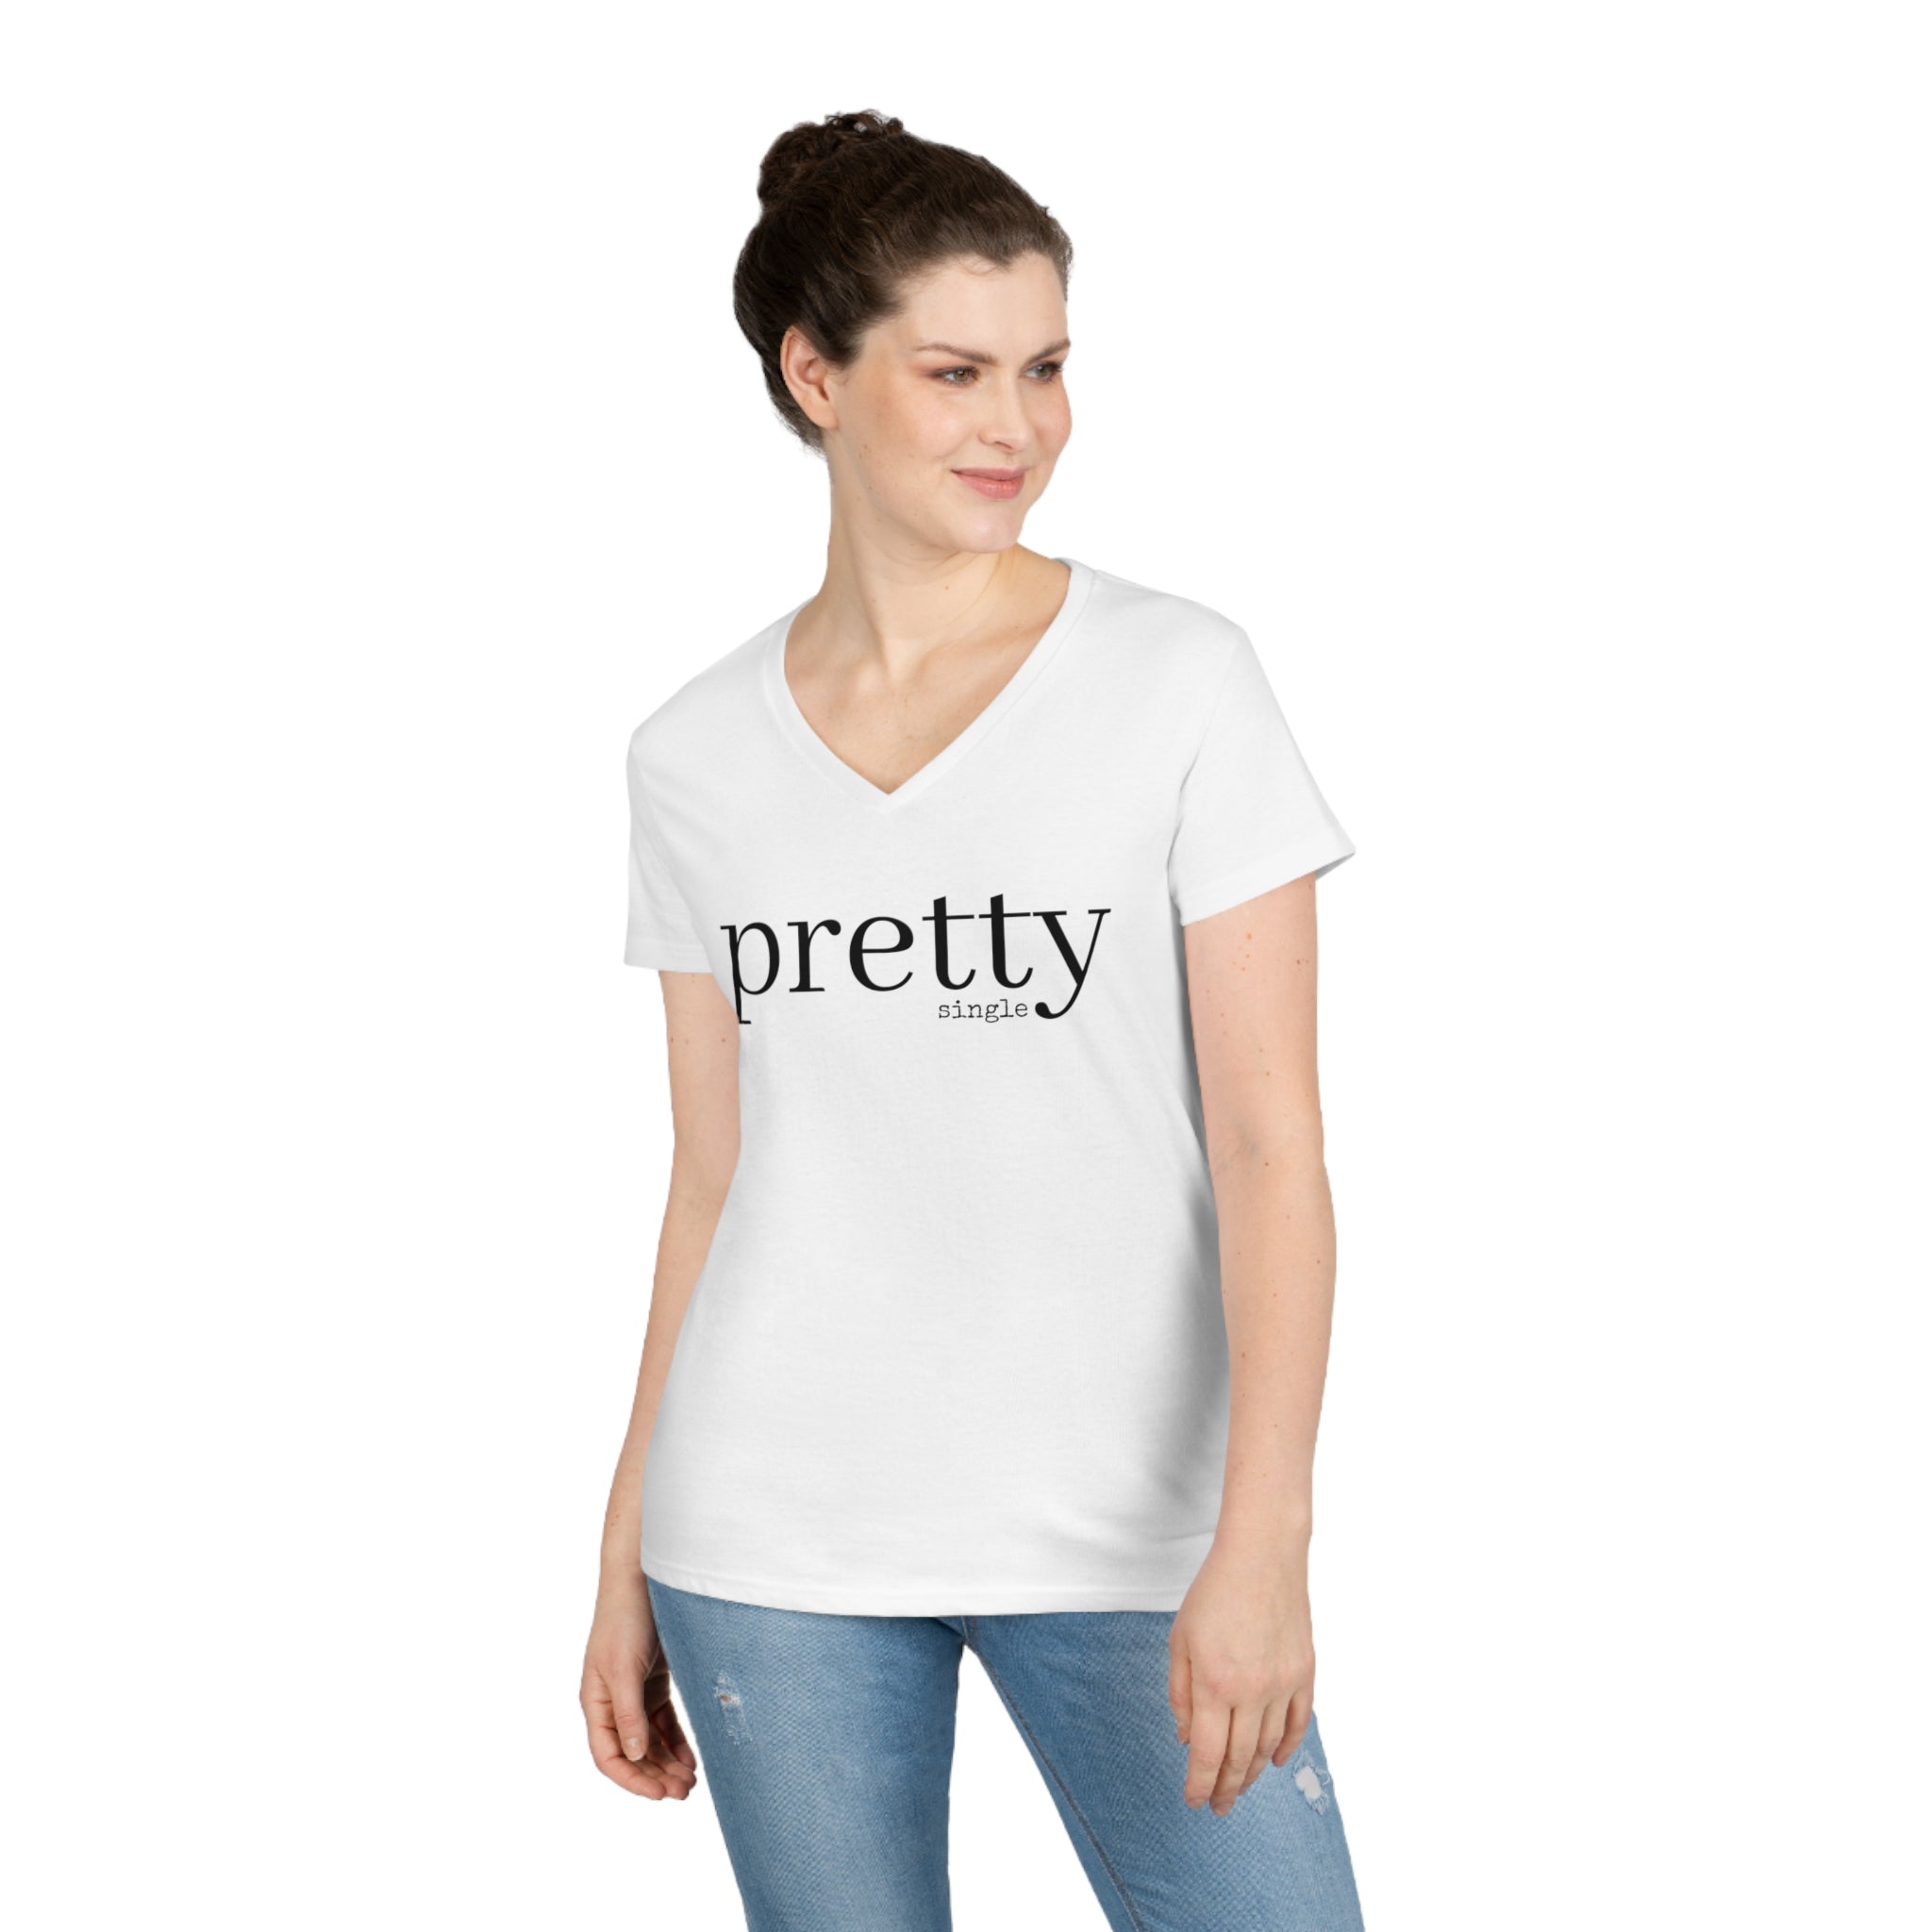 PRETTY single Women's V Neck T-shirt, Cute Graphic Tee